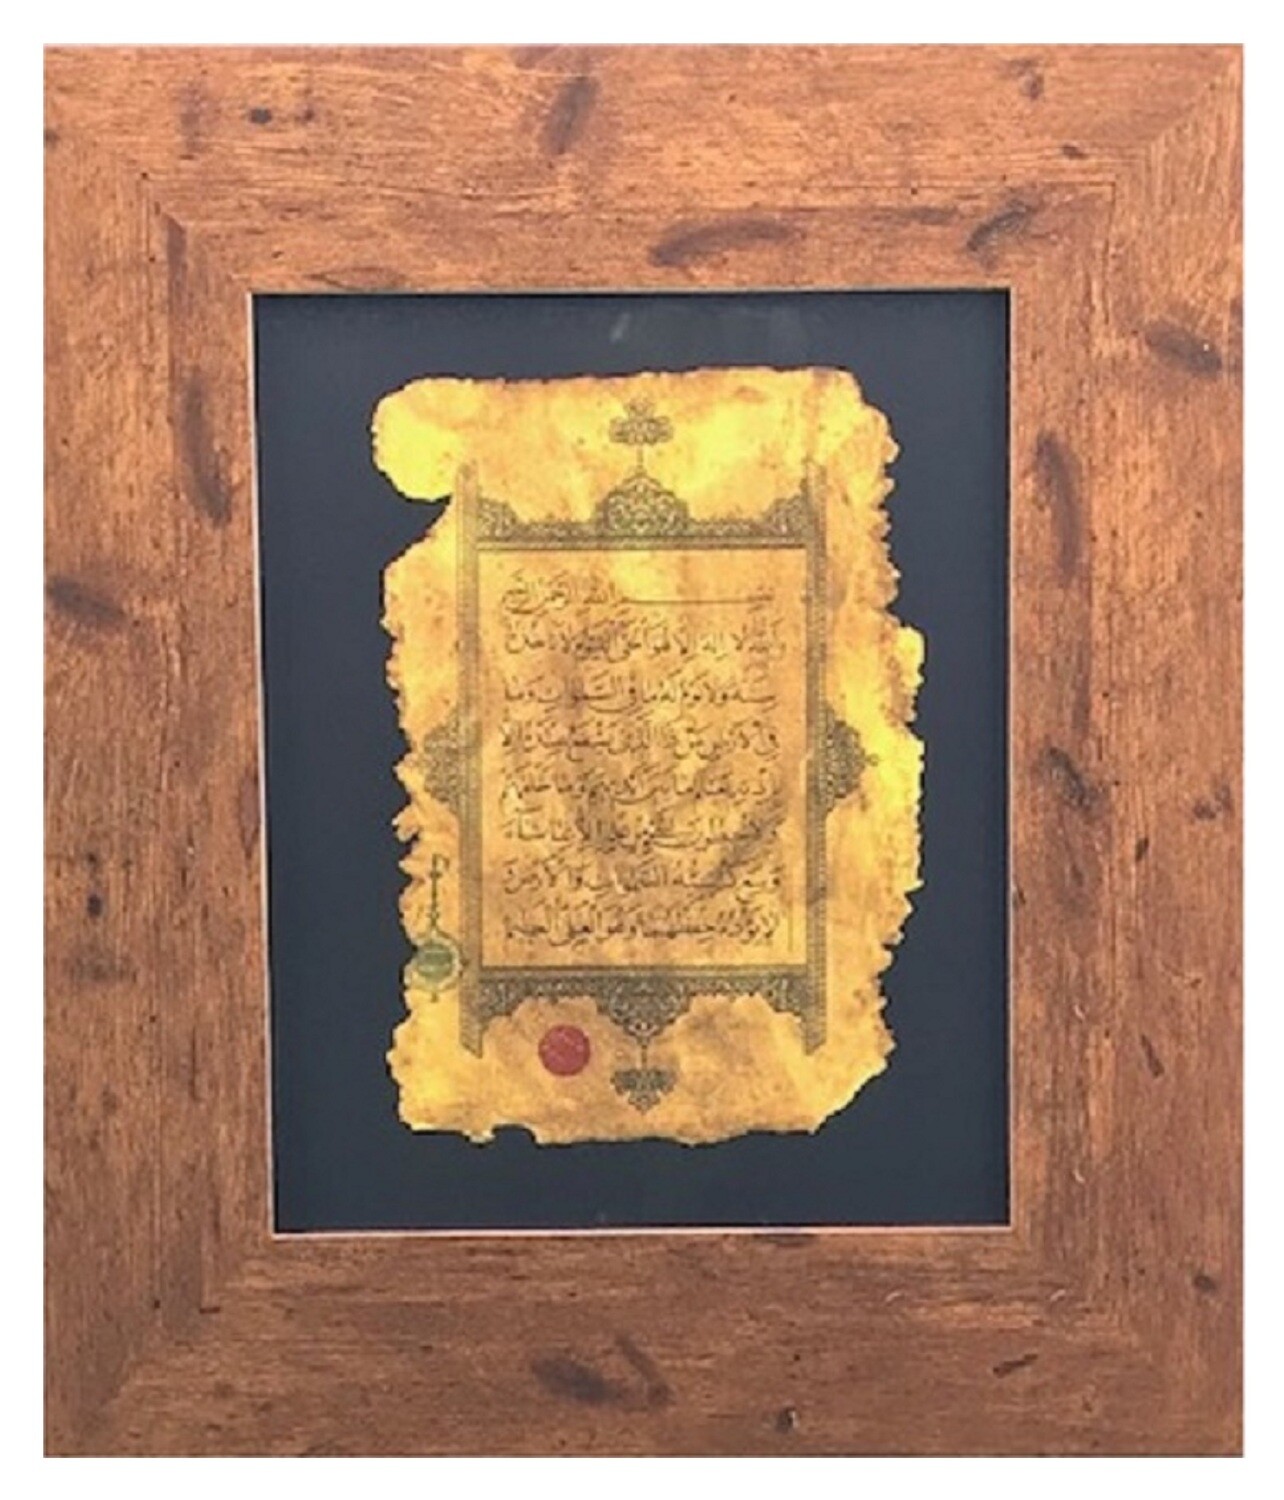 Ayat Ul-Kursi Antiqued Manuscript in a Brown Walnut Gloss Frame